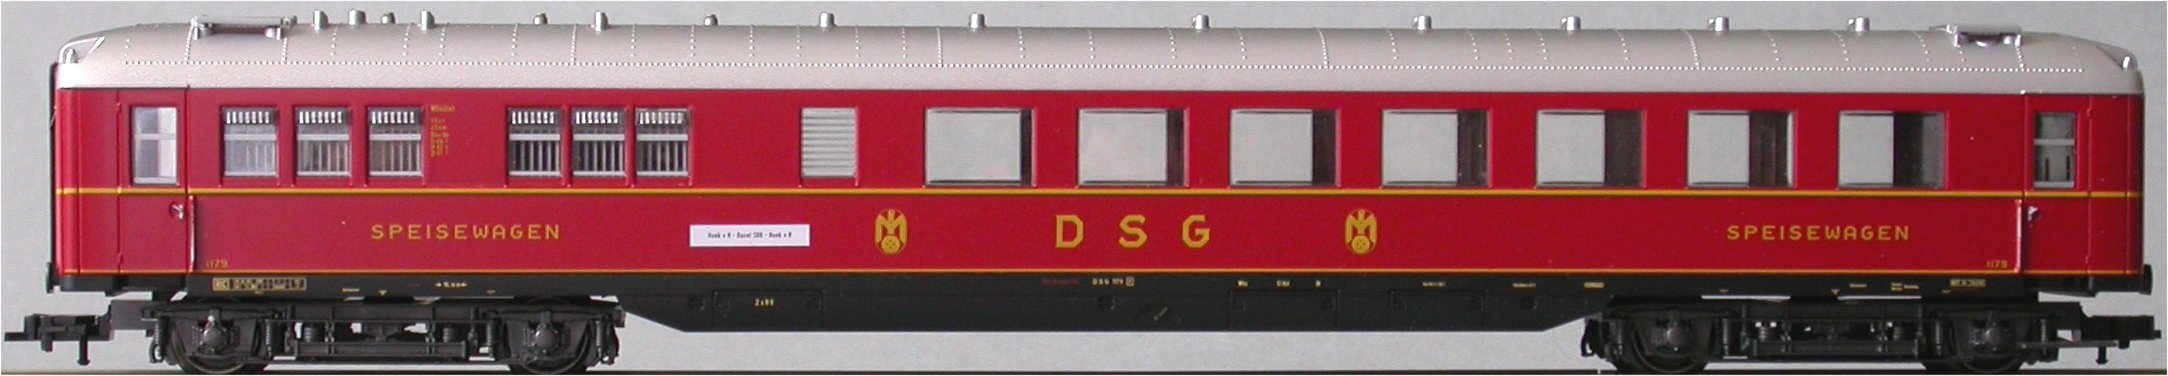 WR4üe-39 DSG 1179 aus Märklin 43209